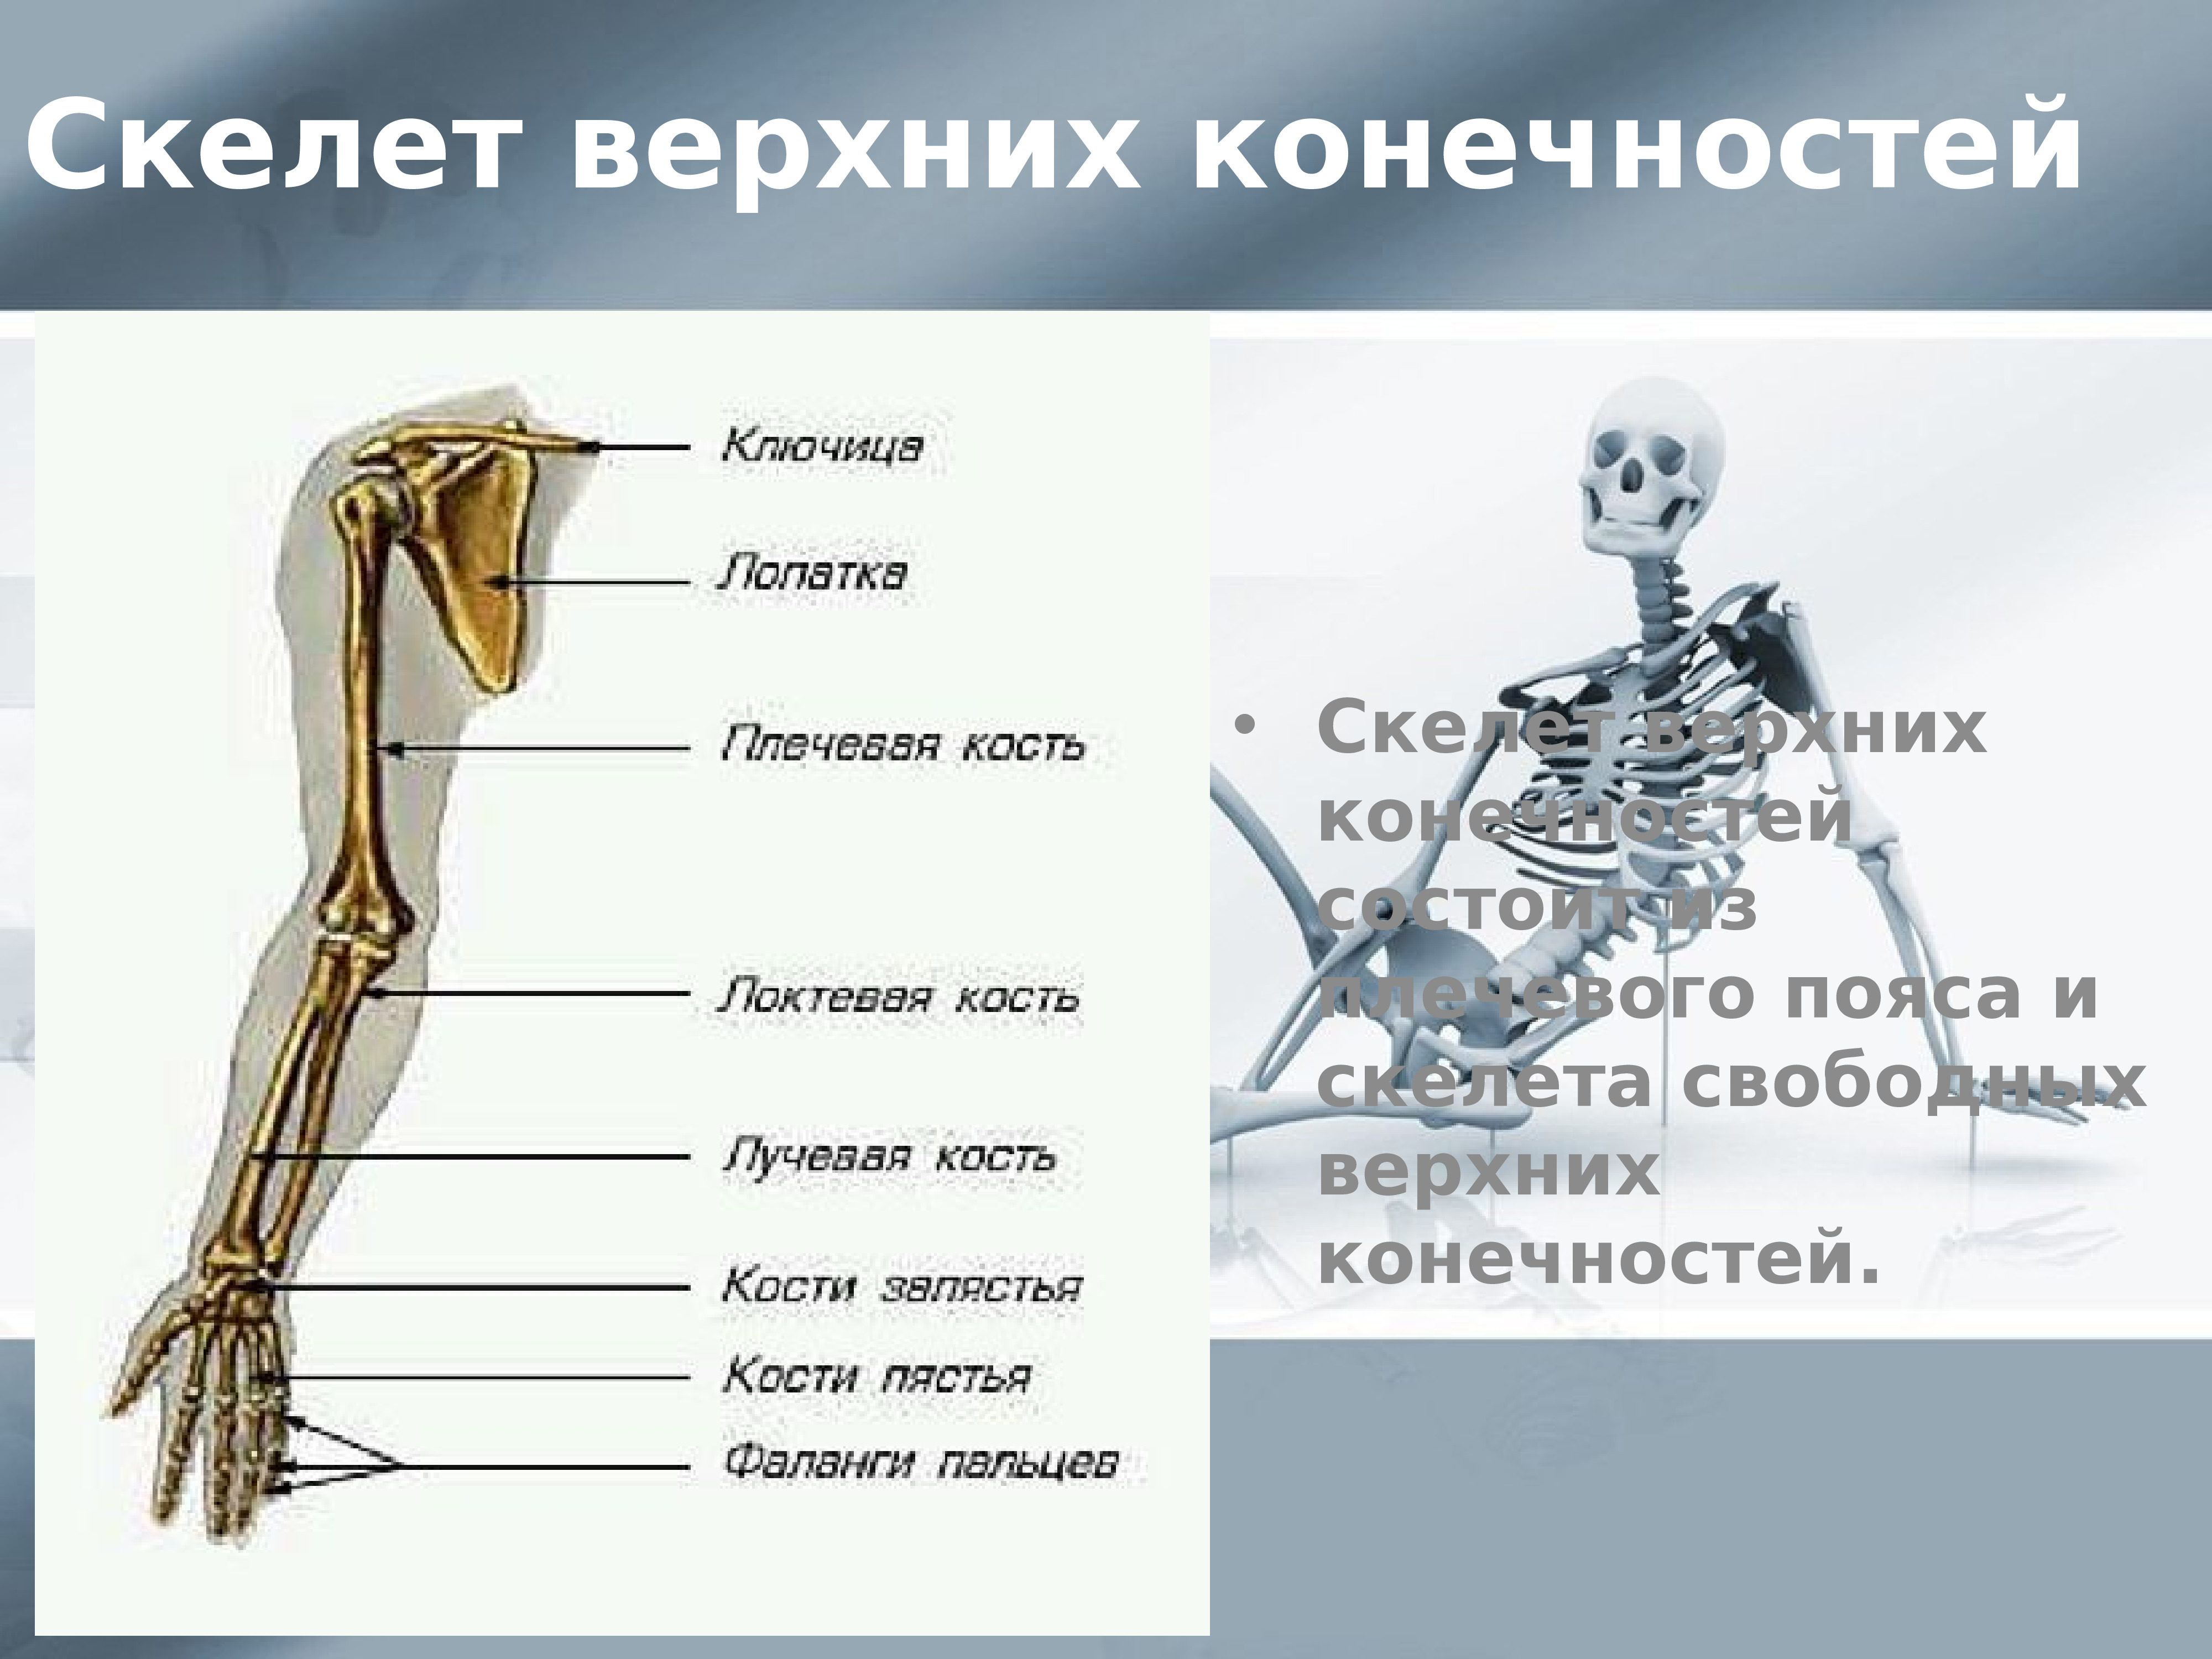 Тема скелет конечностей. Скелет верхней конечности. Плечевой пояс и скелет верхних конечностей. Скелет свободной верхней конечности. Скелет плечевого пояса и свободной верхней конечности.